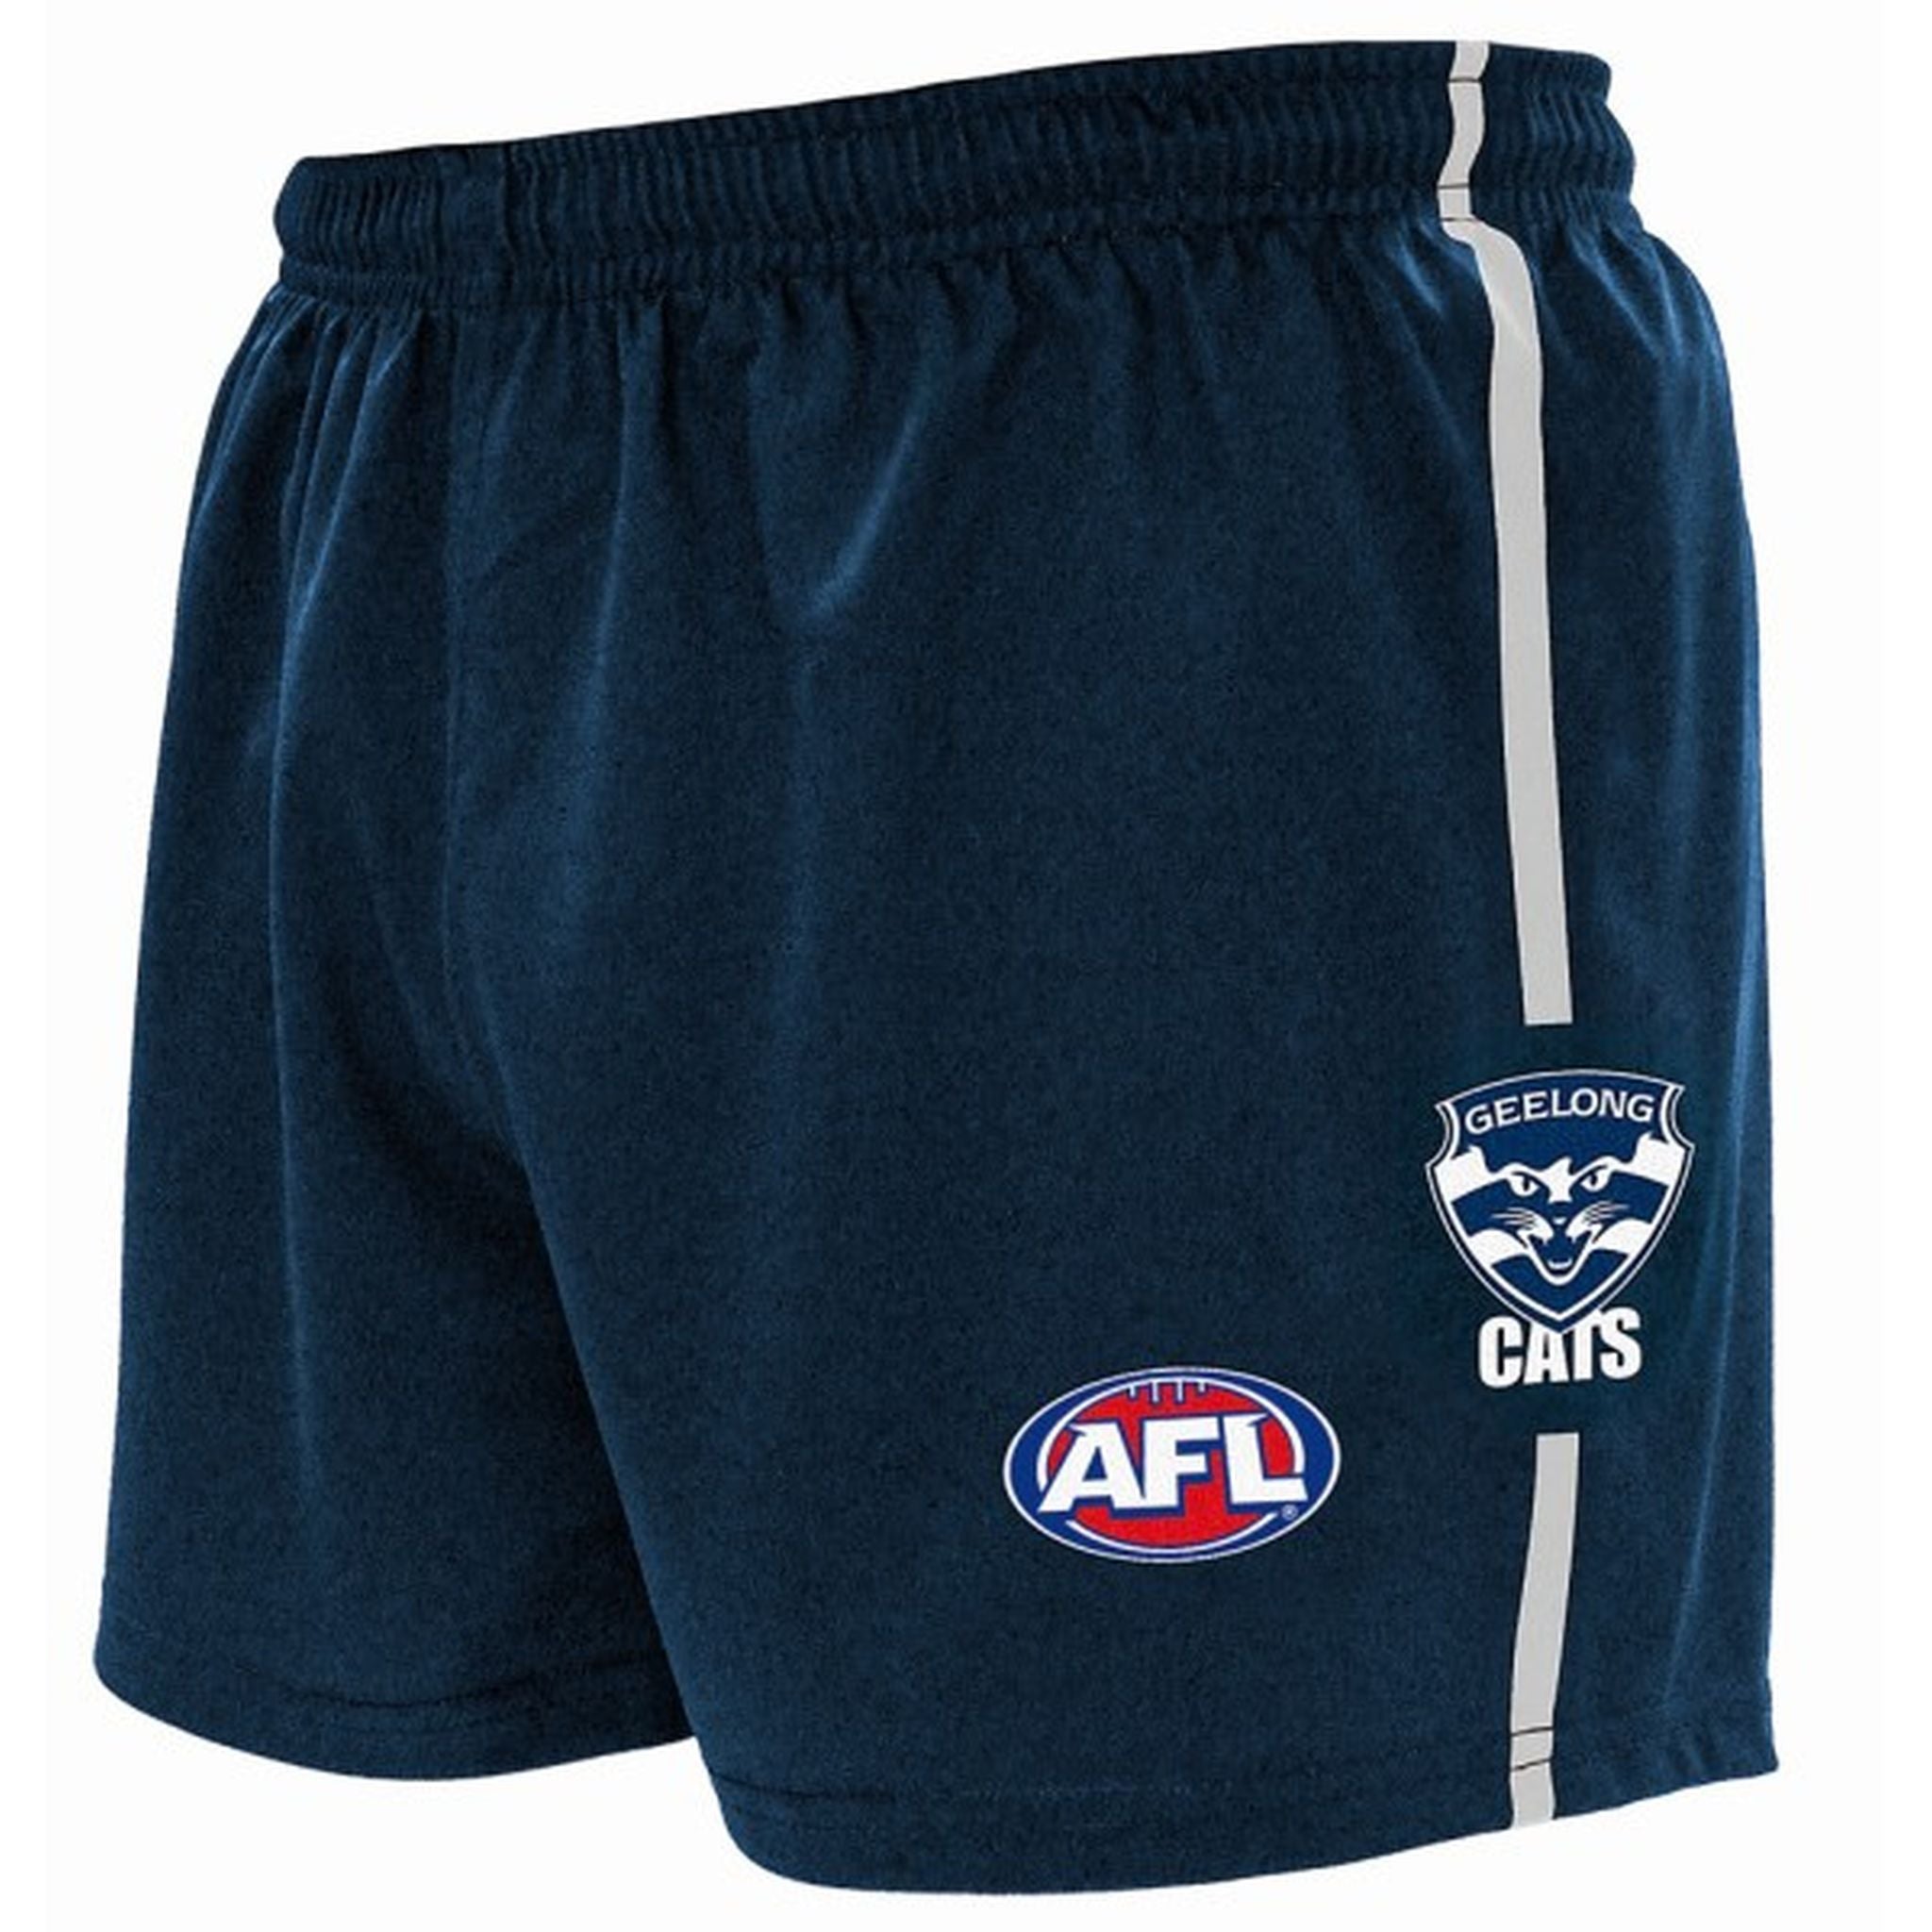 Burley Geelong Cats AFL Replica Kids Shorts